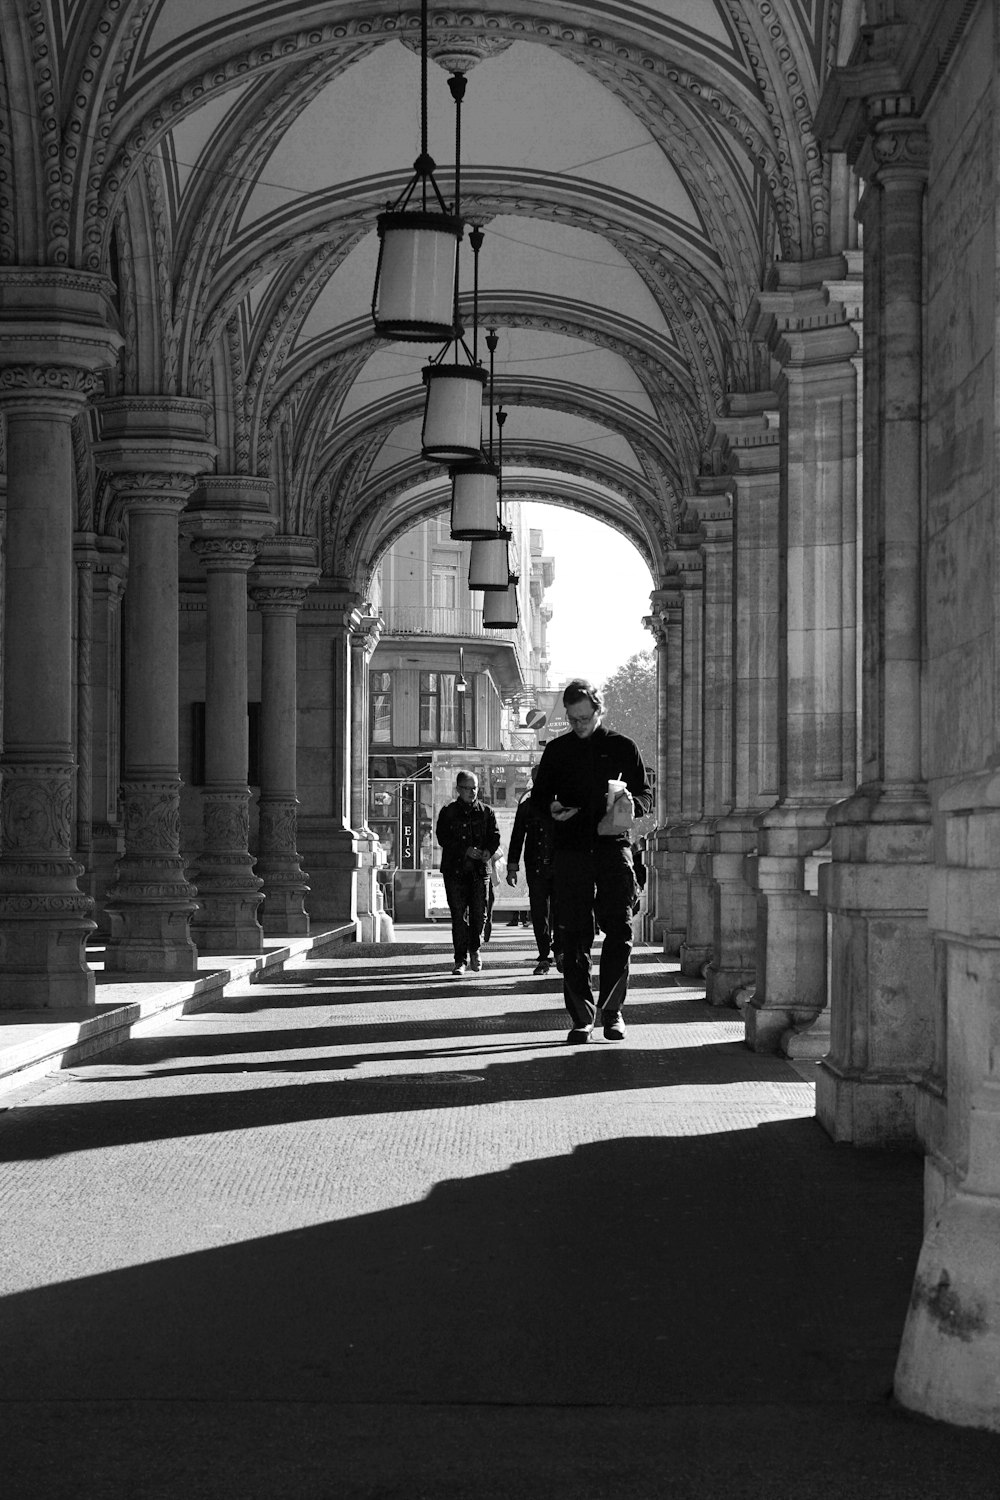 greyscale photo of man walking near pillars